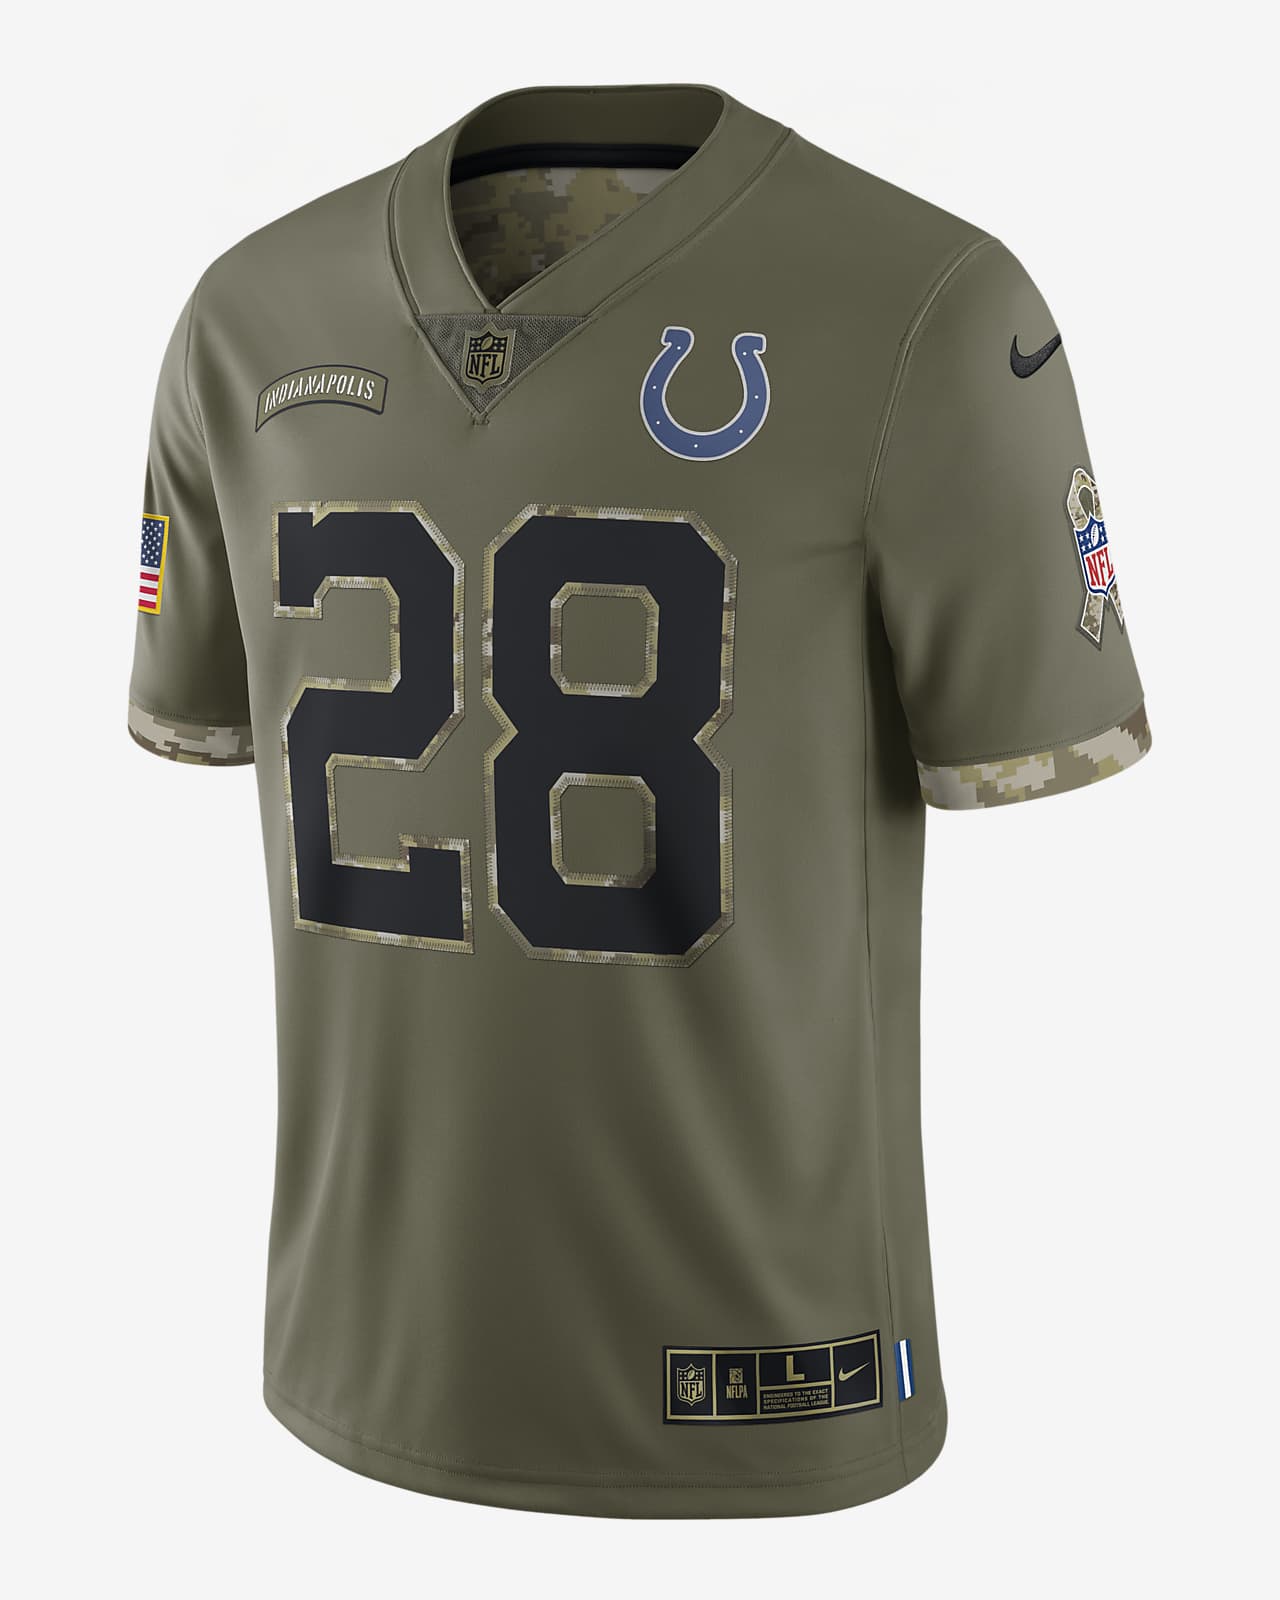 Indianapolis Colts Jerseys, Colts Uniform, Jersey